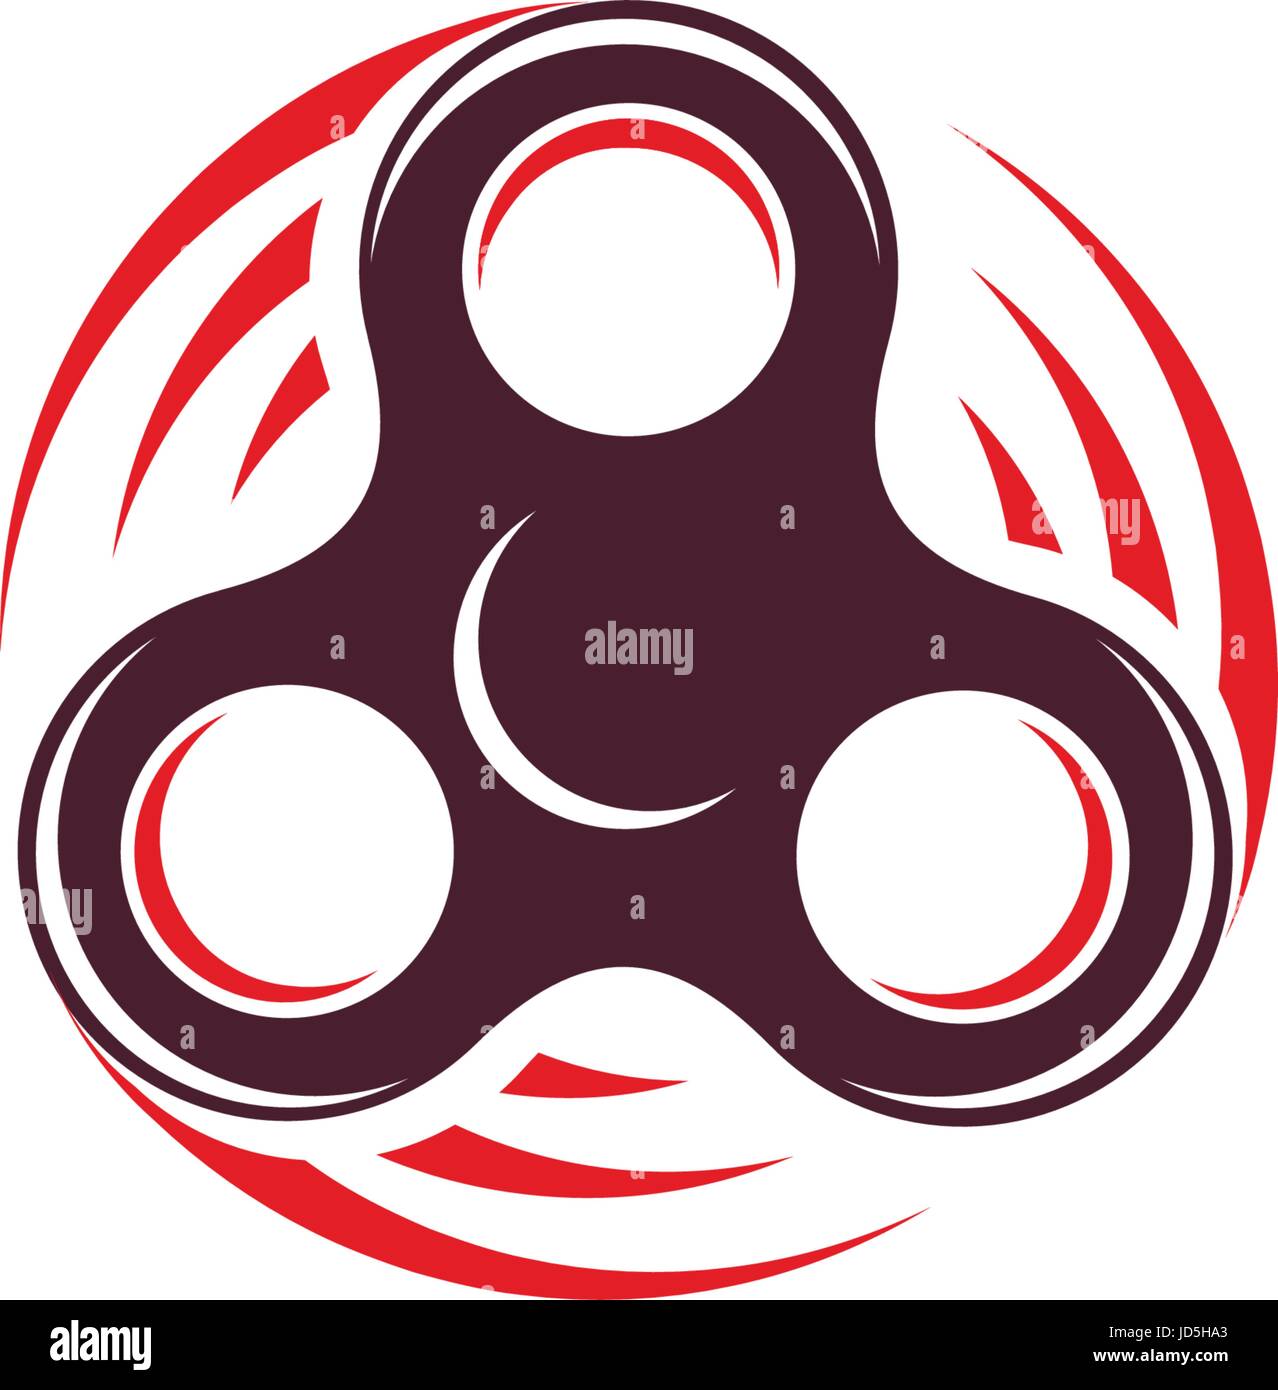 Spinner-Logo-Design. Lager coole moderne Gerätesymbol. Unterhaltsame Spiele  einfacher Mechanismus für Fan, beruhigende. Vektor-Illustration-eps10  Stock-Vektorgrafik - Alamy